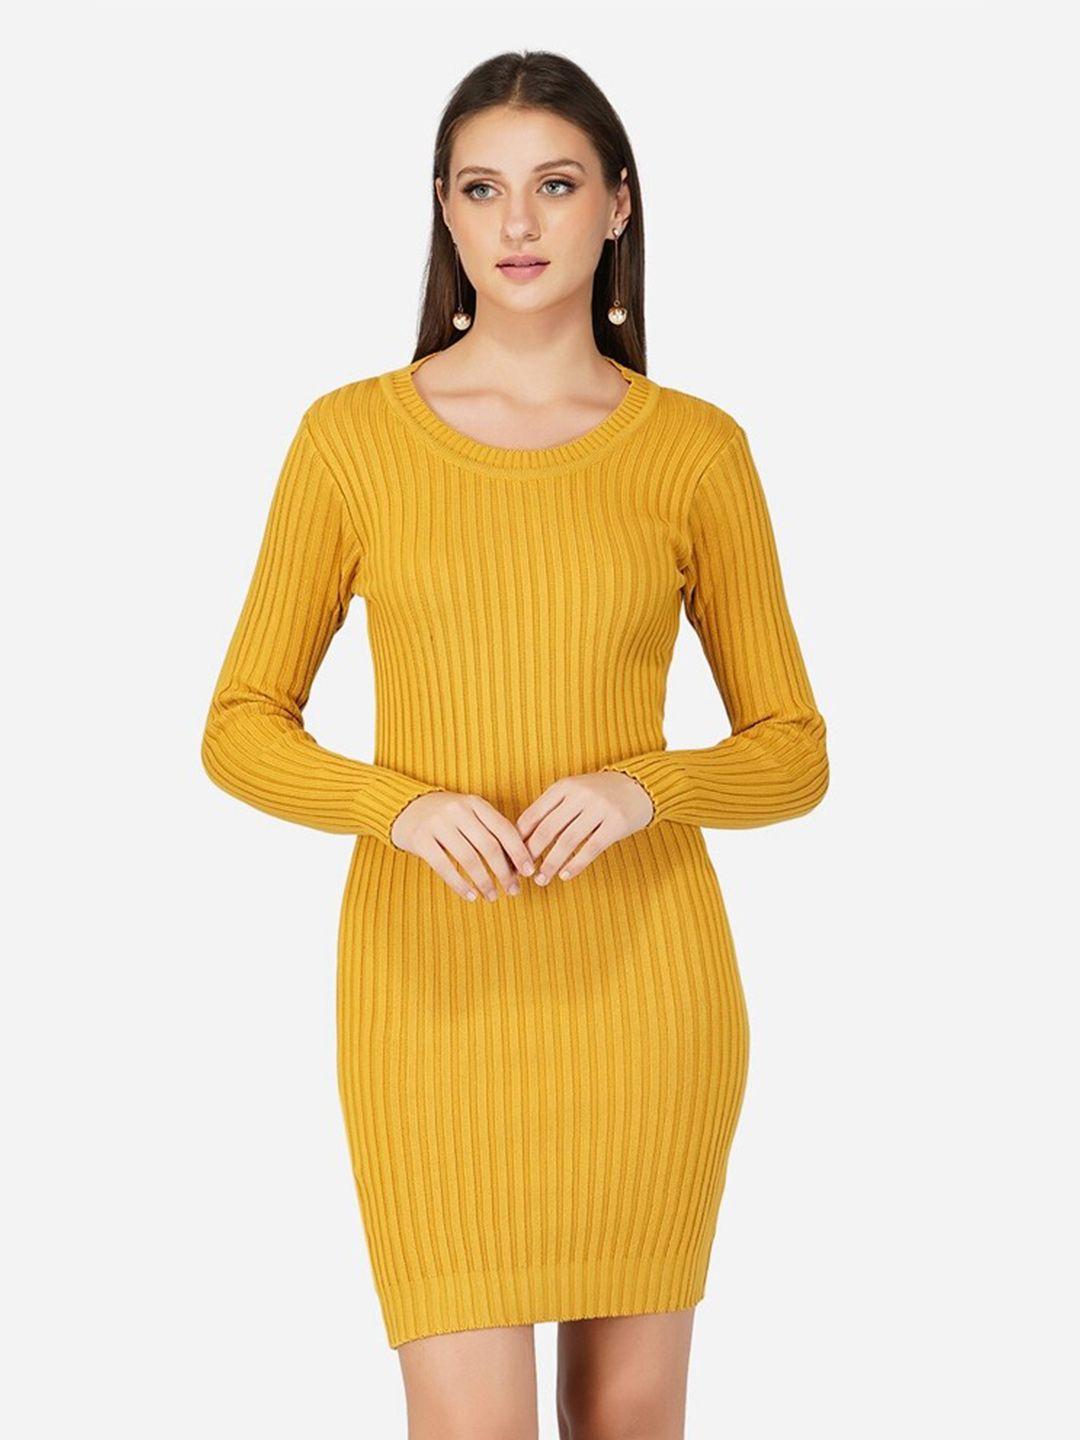 joe hazel mustard yellow striped bodycon dress